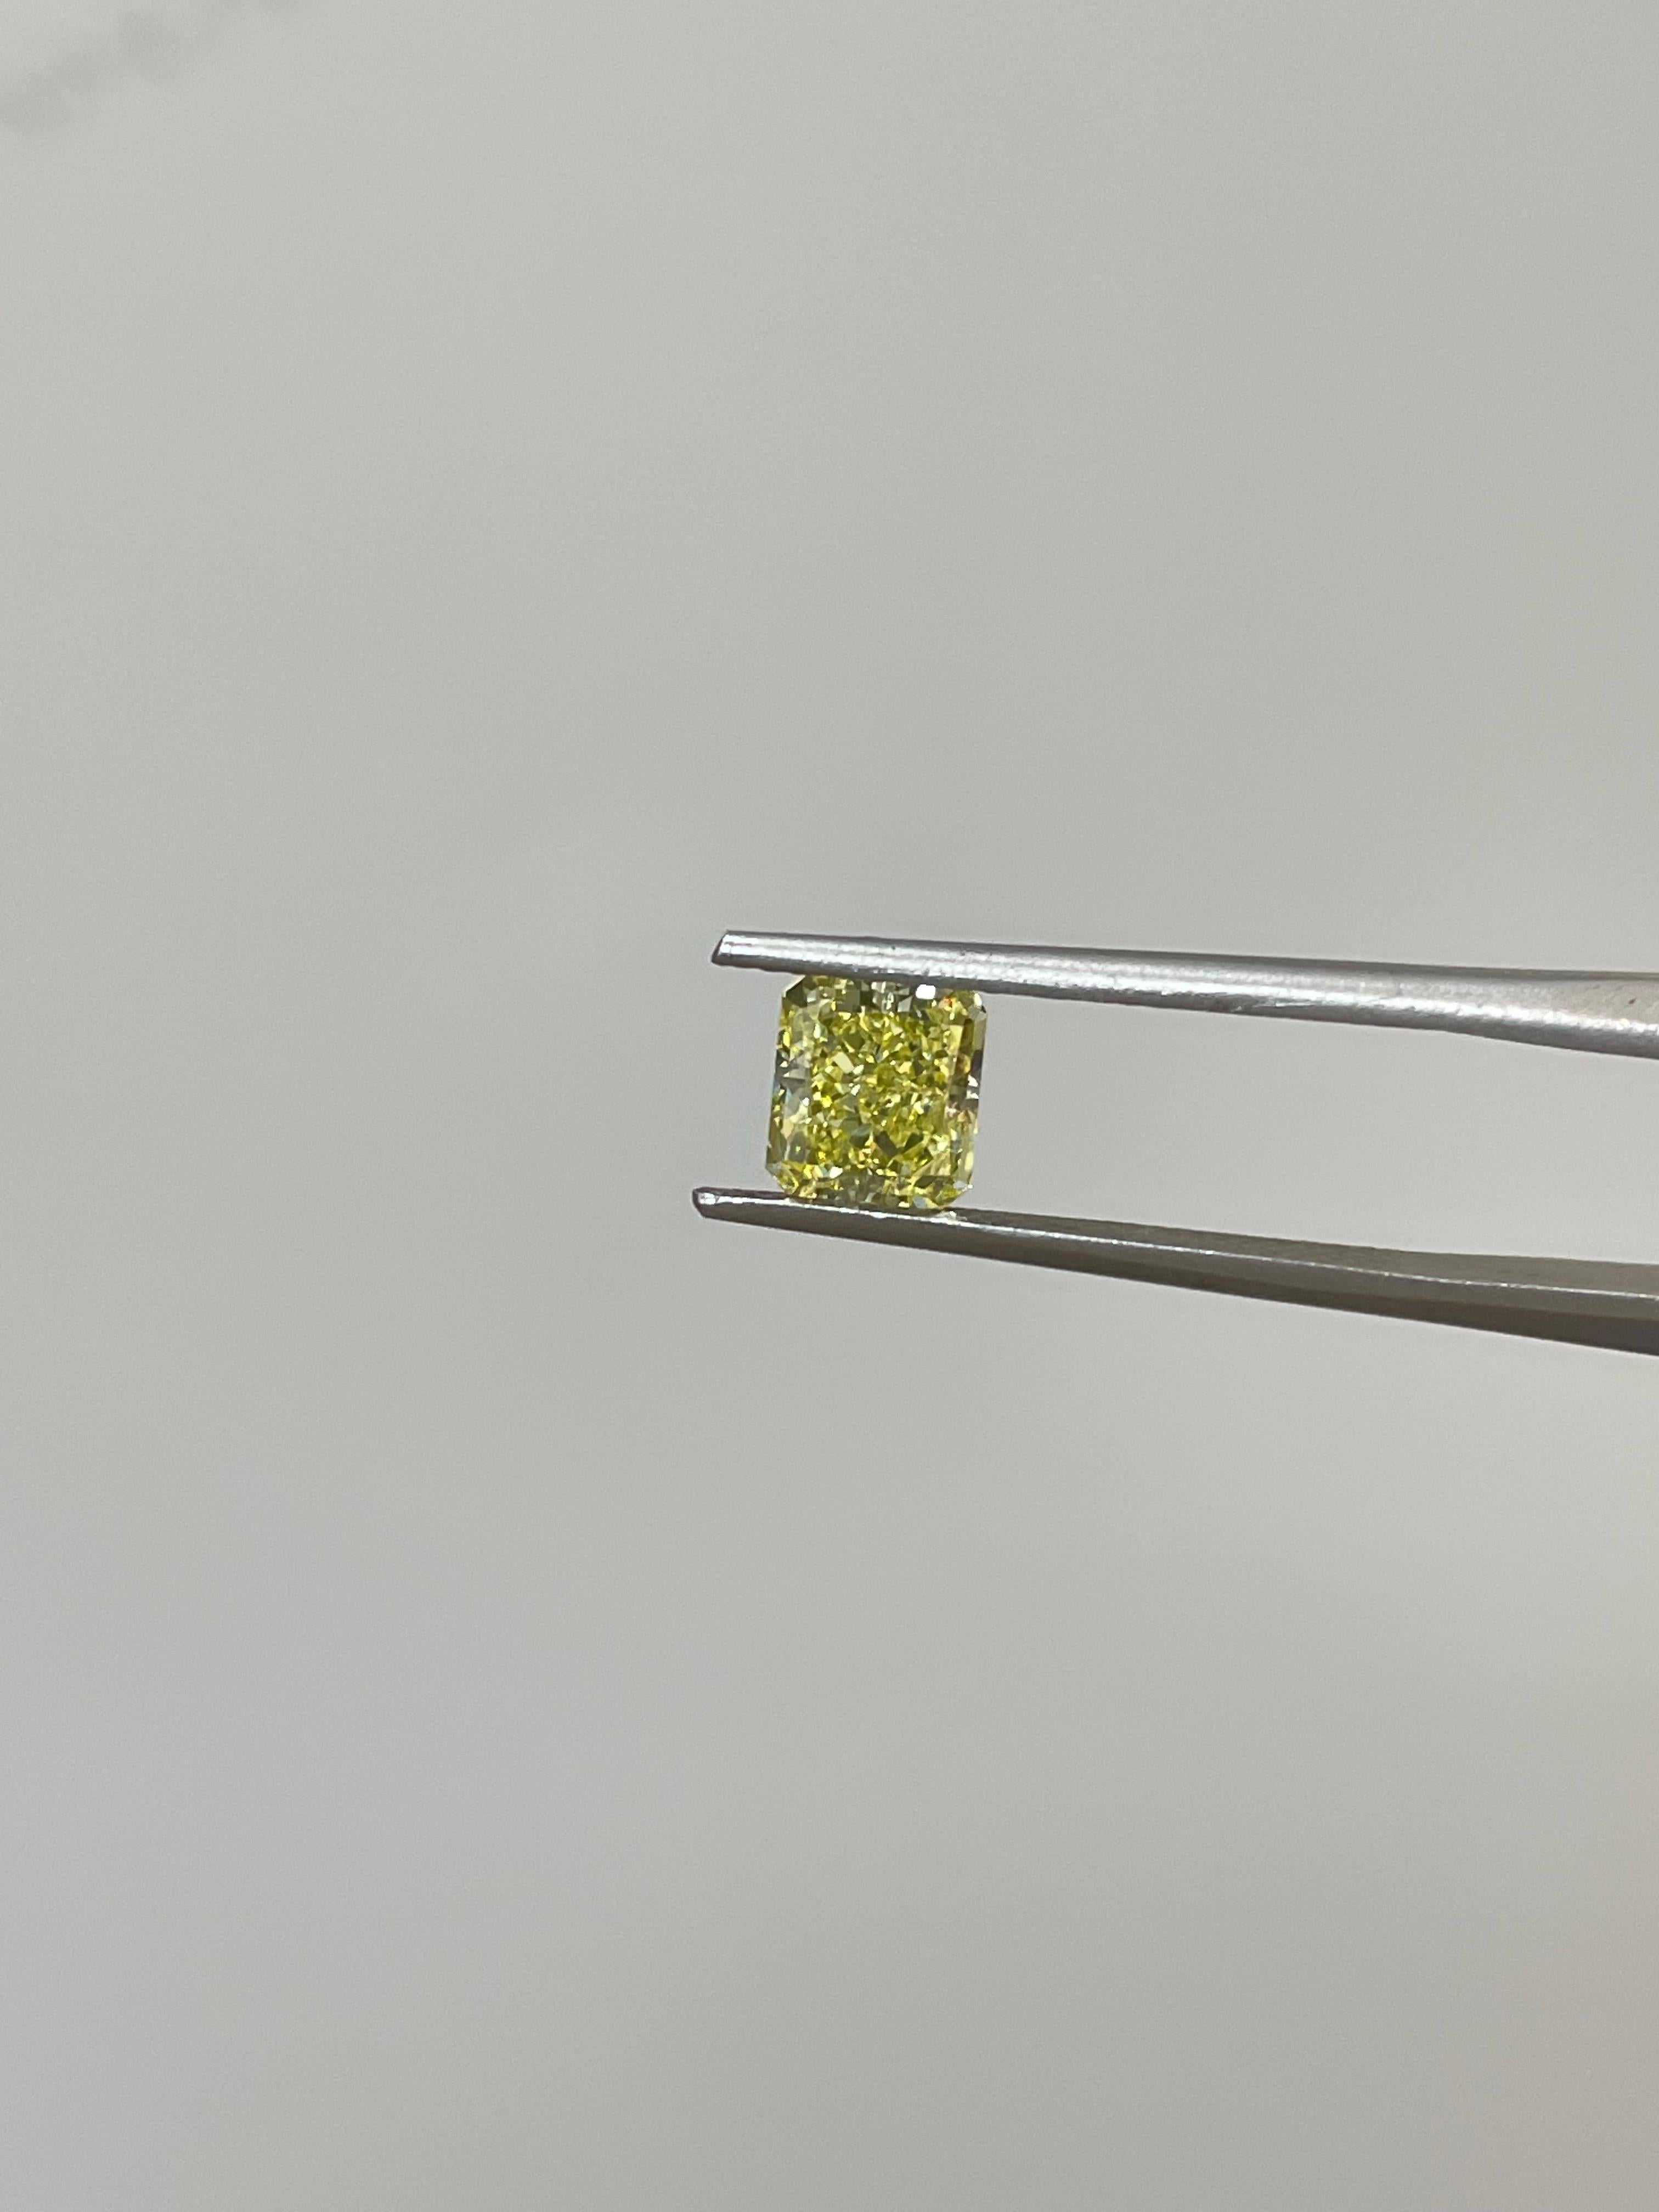 Brilliant Cut 1.28 Carat Rectangular Brilliant GIA Certified Fancy Yellow VS2 Clarity Diamond For Sale